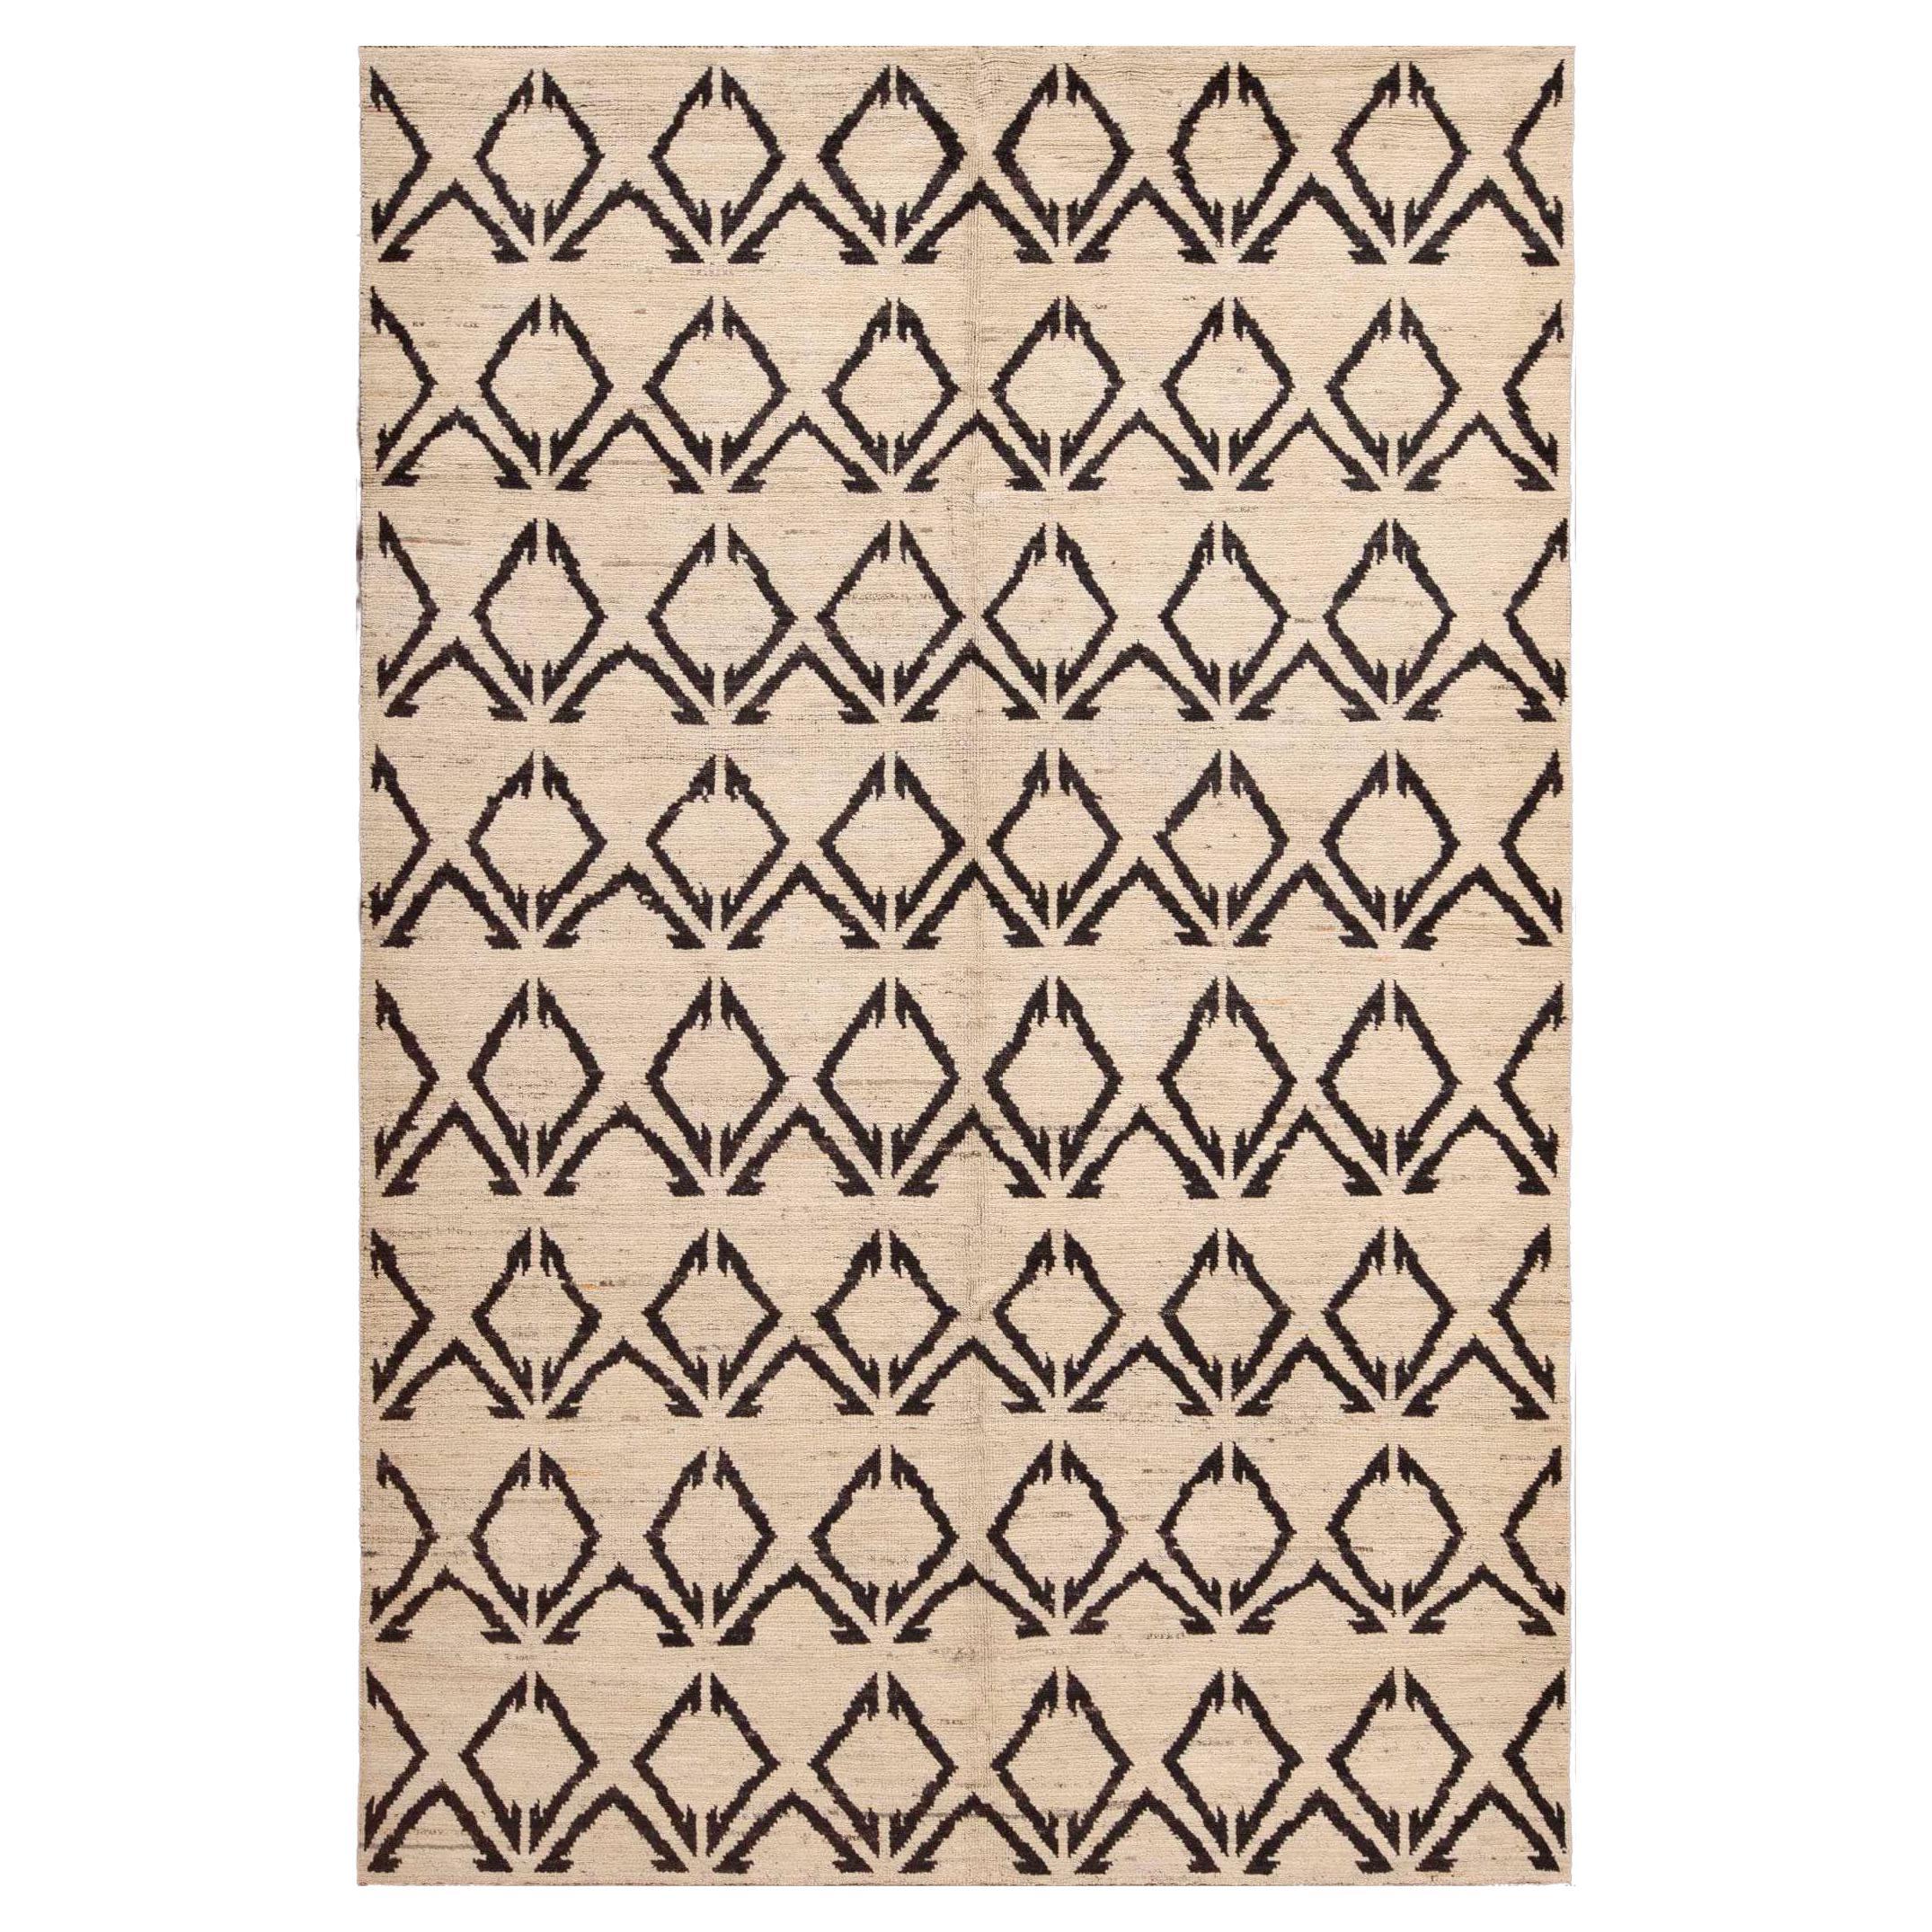 Nazmiyal Collection Bold Charcoal Tribal Geometric Modern Area Rug 6'4" x 9'5" For Sale